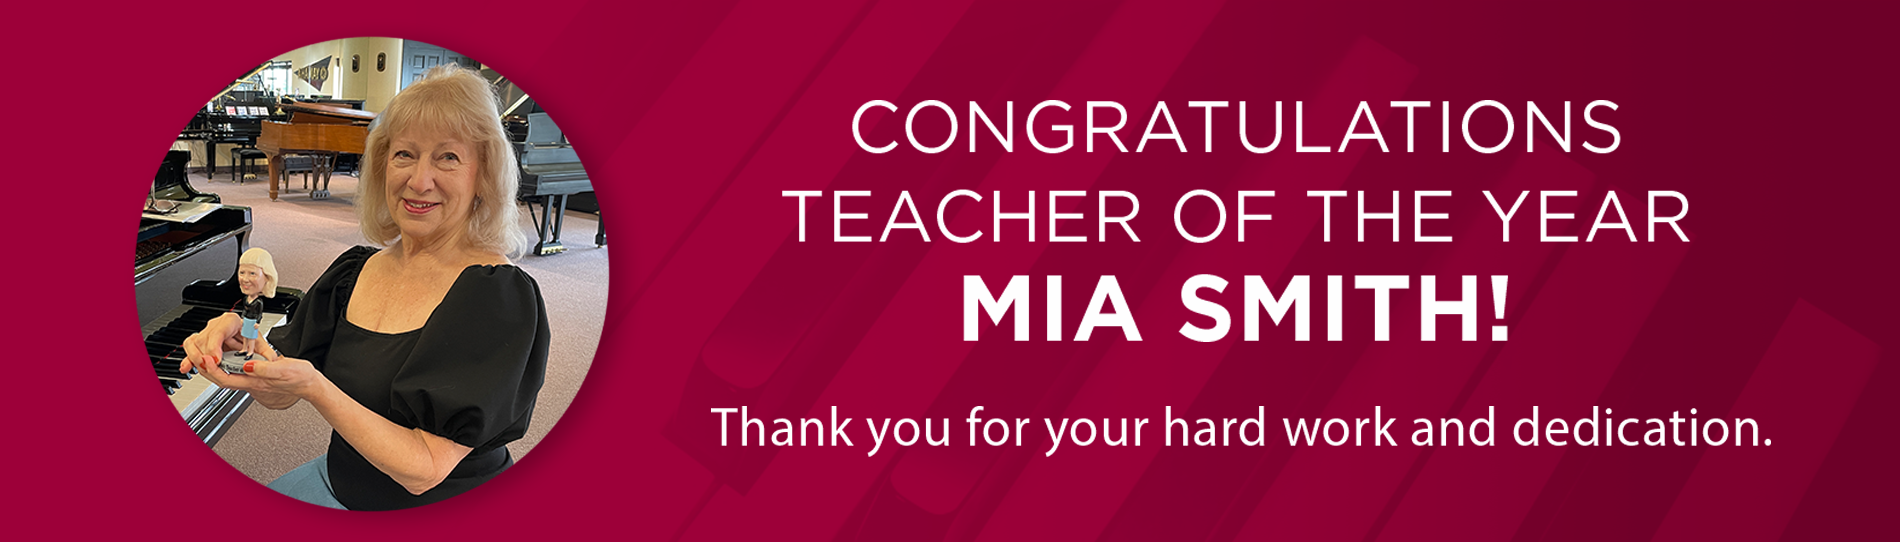 Congratulations teacher of the year, Mia Smith.